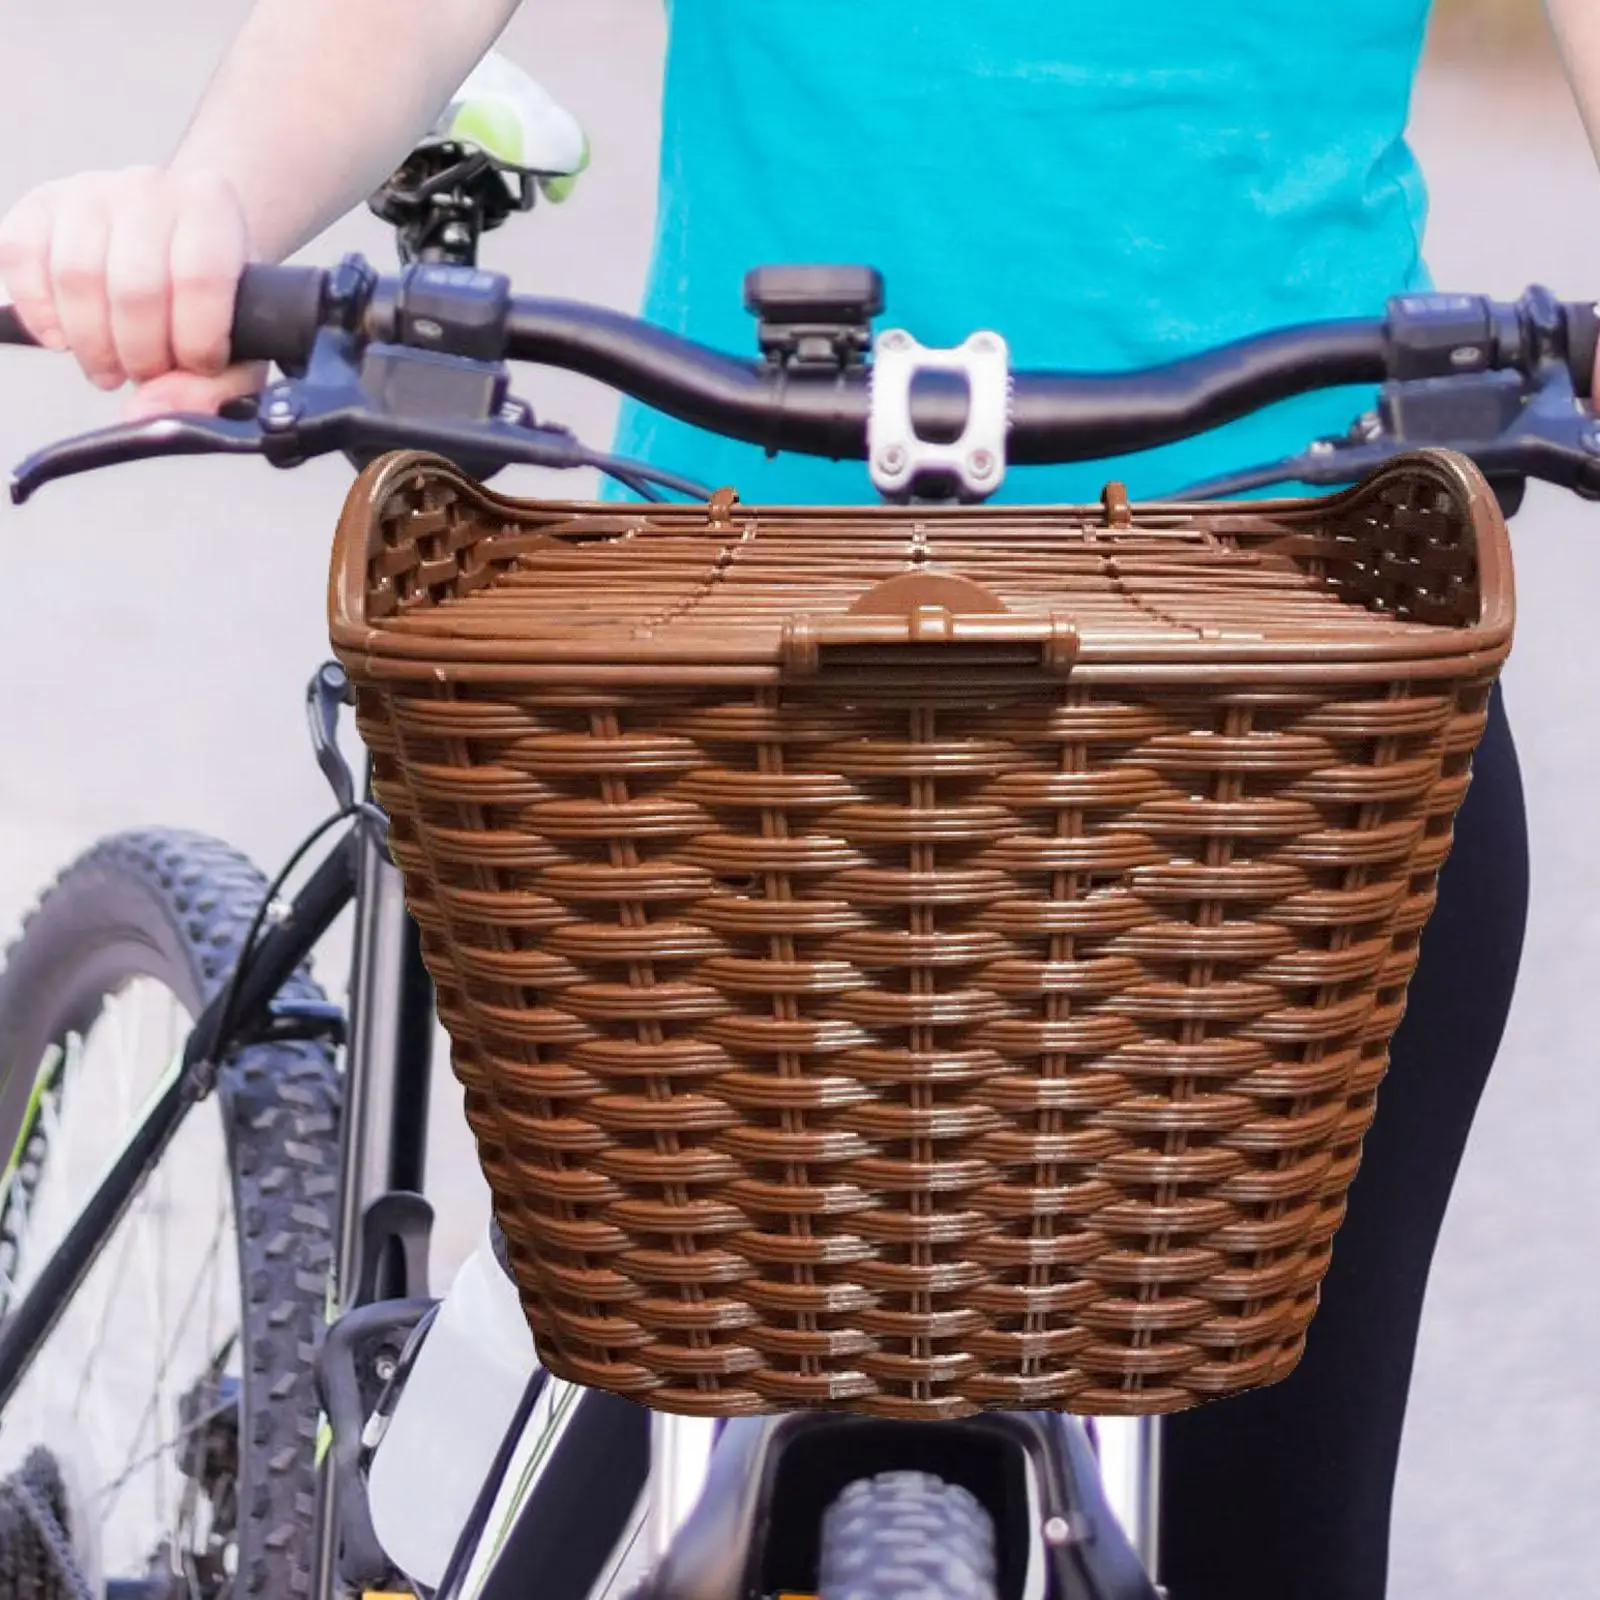 Bike Basket with Lid Detachable Durable Retro Style Electric Vehicle Basket Bicycle Handlebar Storage Basket Accessories